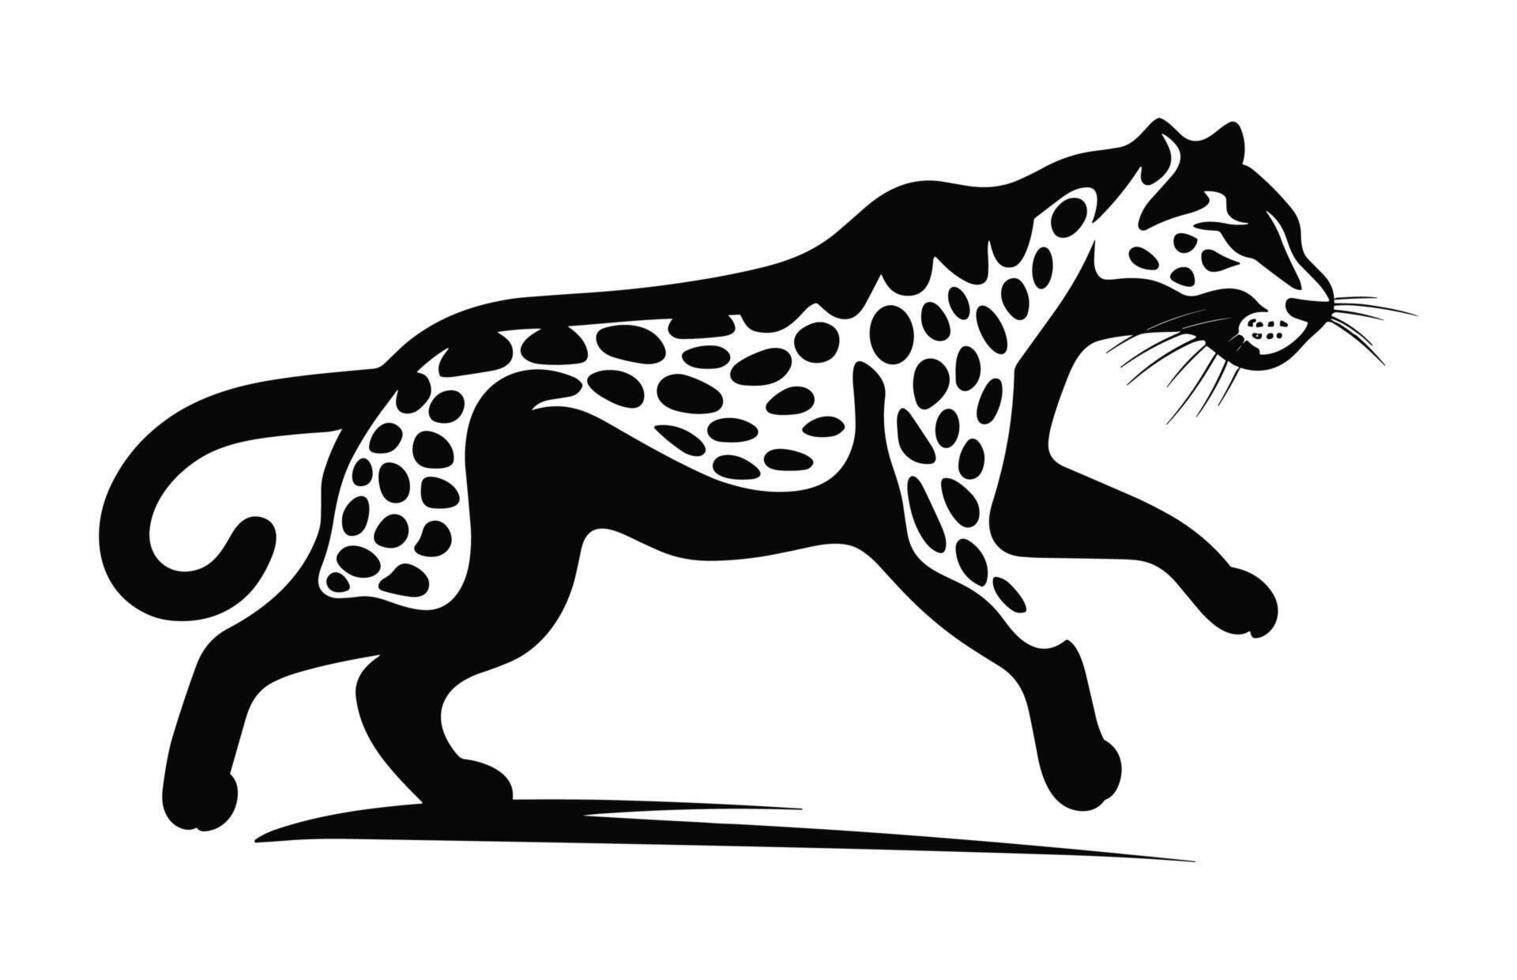 Cheetah Vector black and white Silhouette, Running Cheetah Silhouette, Wildcat Clipart